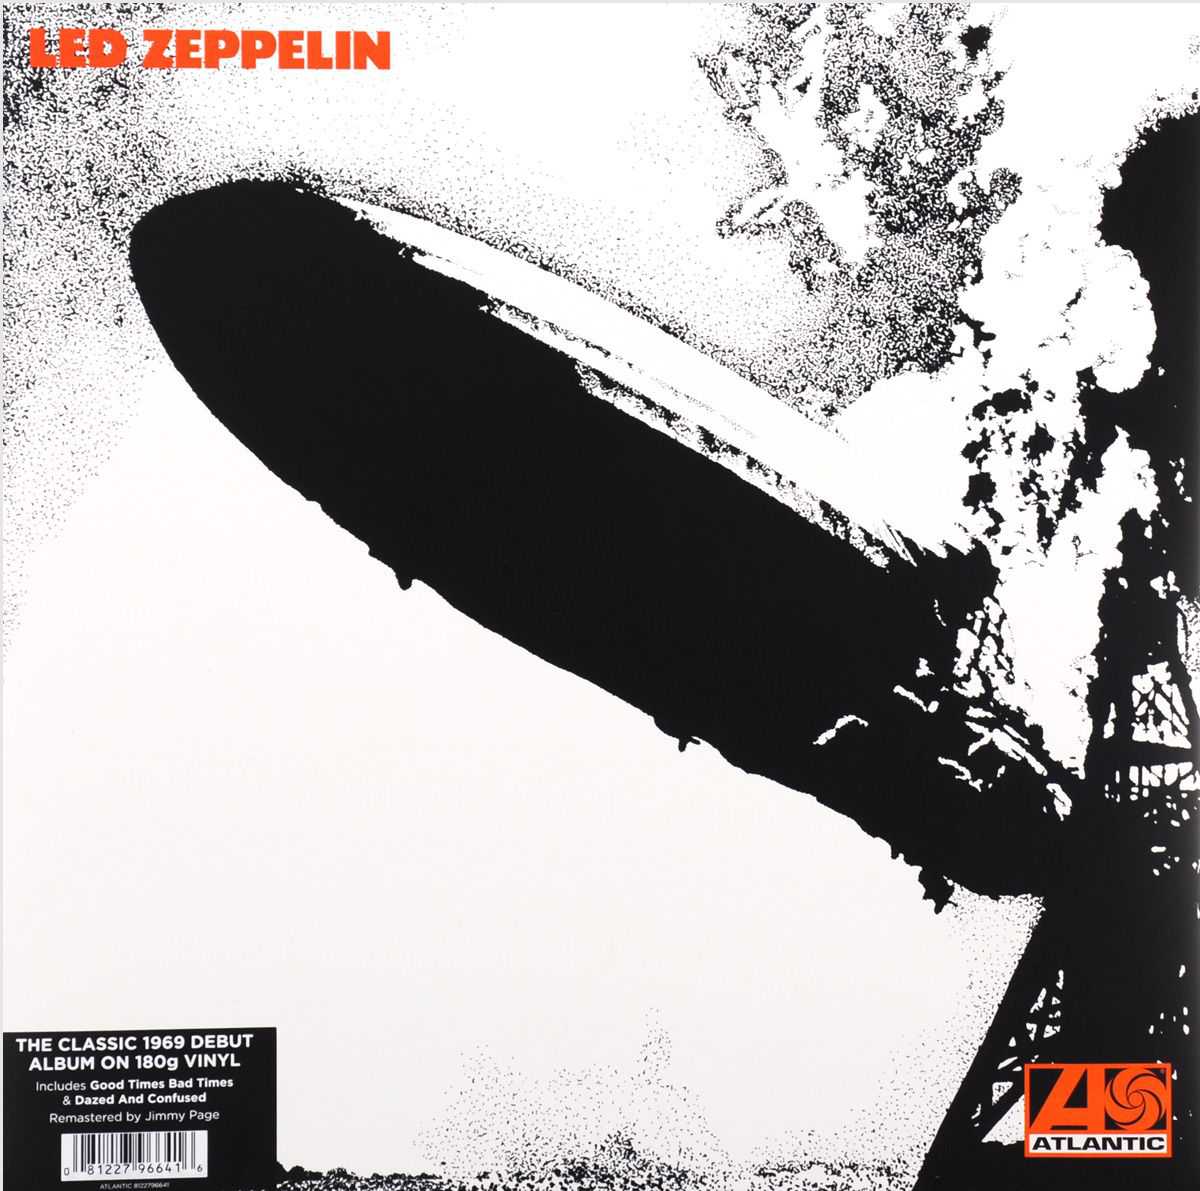 Led Zeppelin - Led Zeppelin I. Remastered Original (LP) led zeppelin led zeppelin i remastered original lp